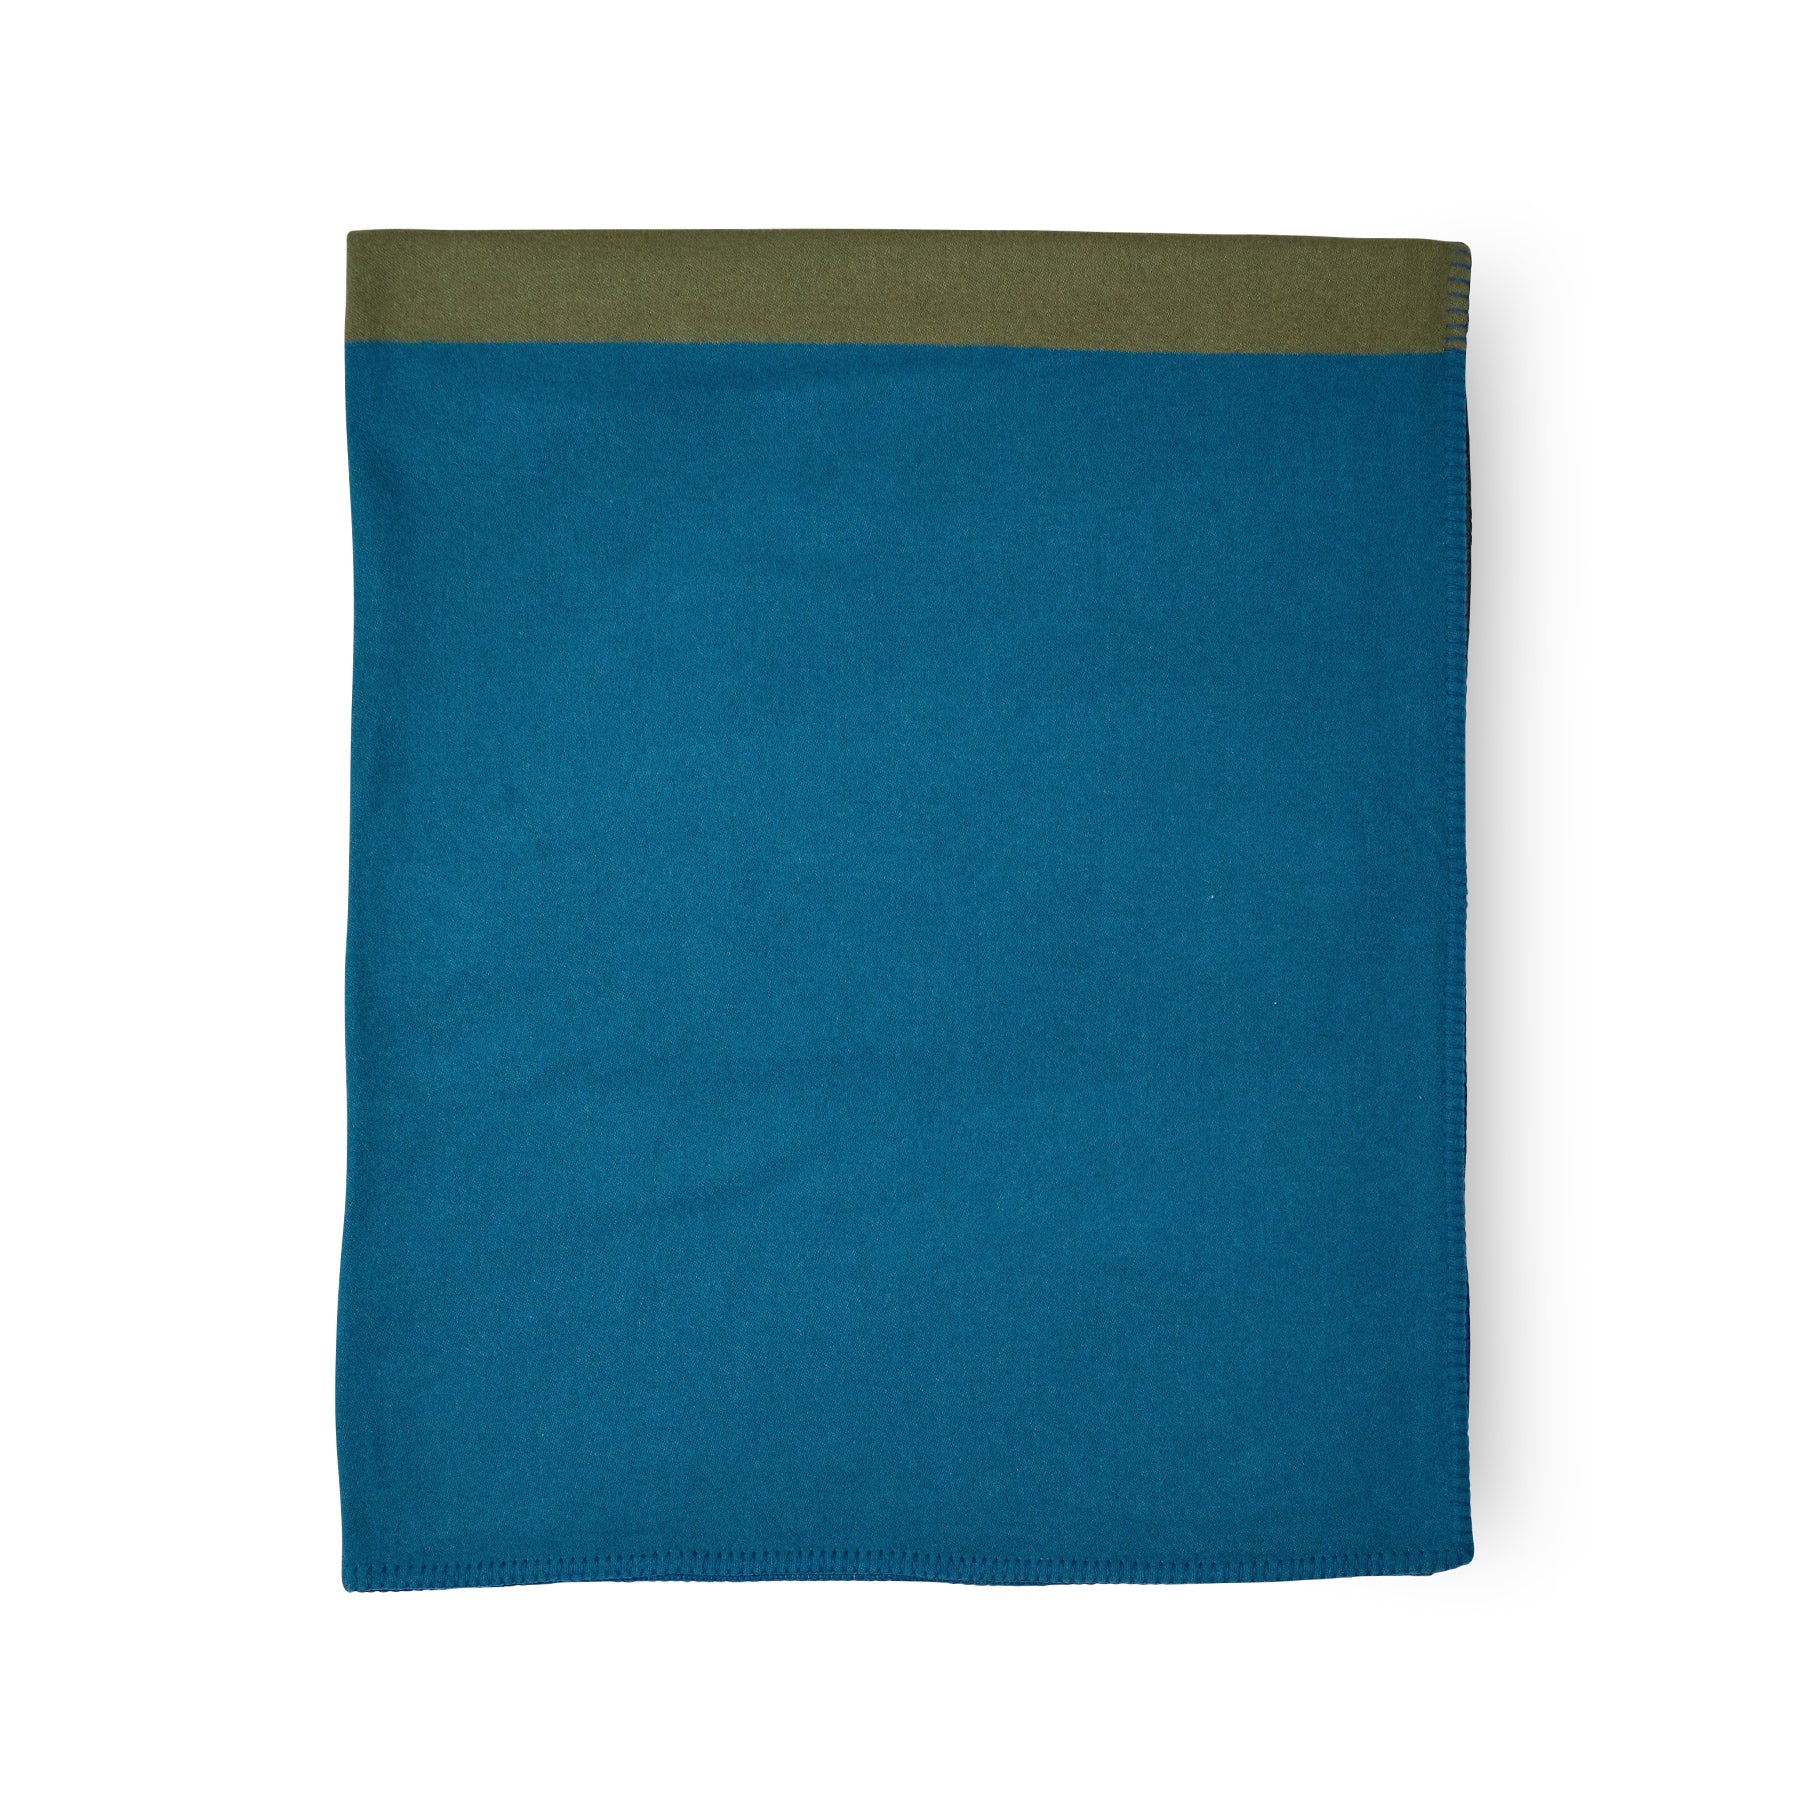 Citta Jacquard Blanket in Peacock Blue Zoom Image 1